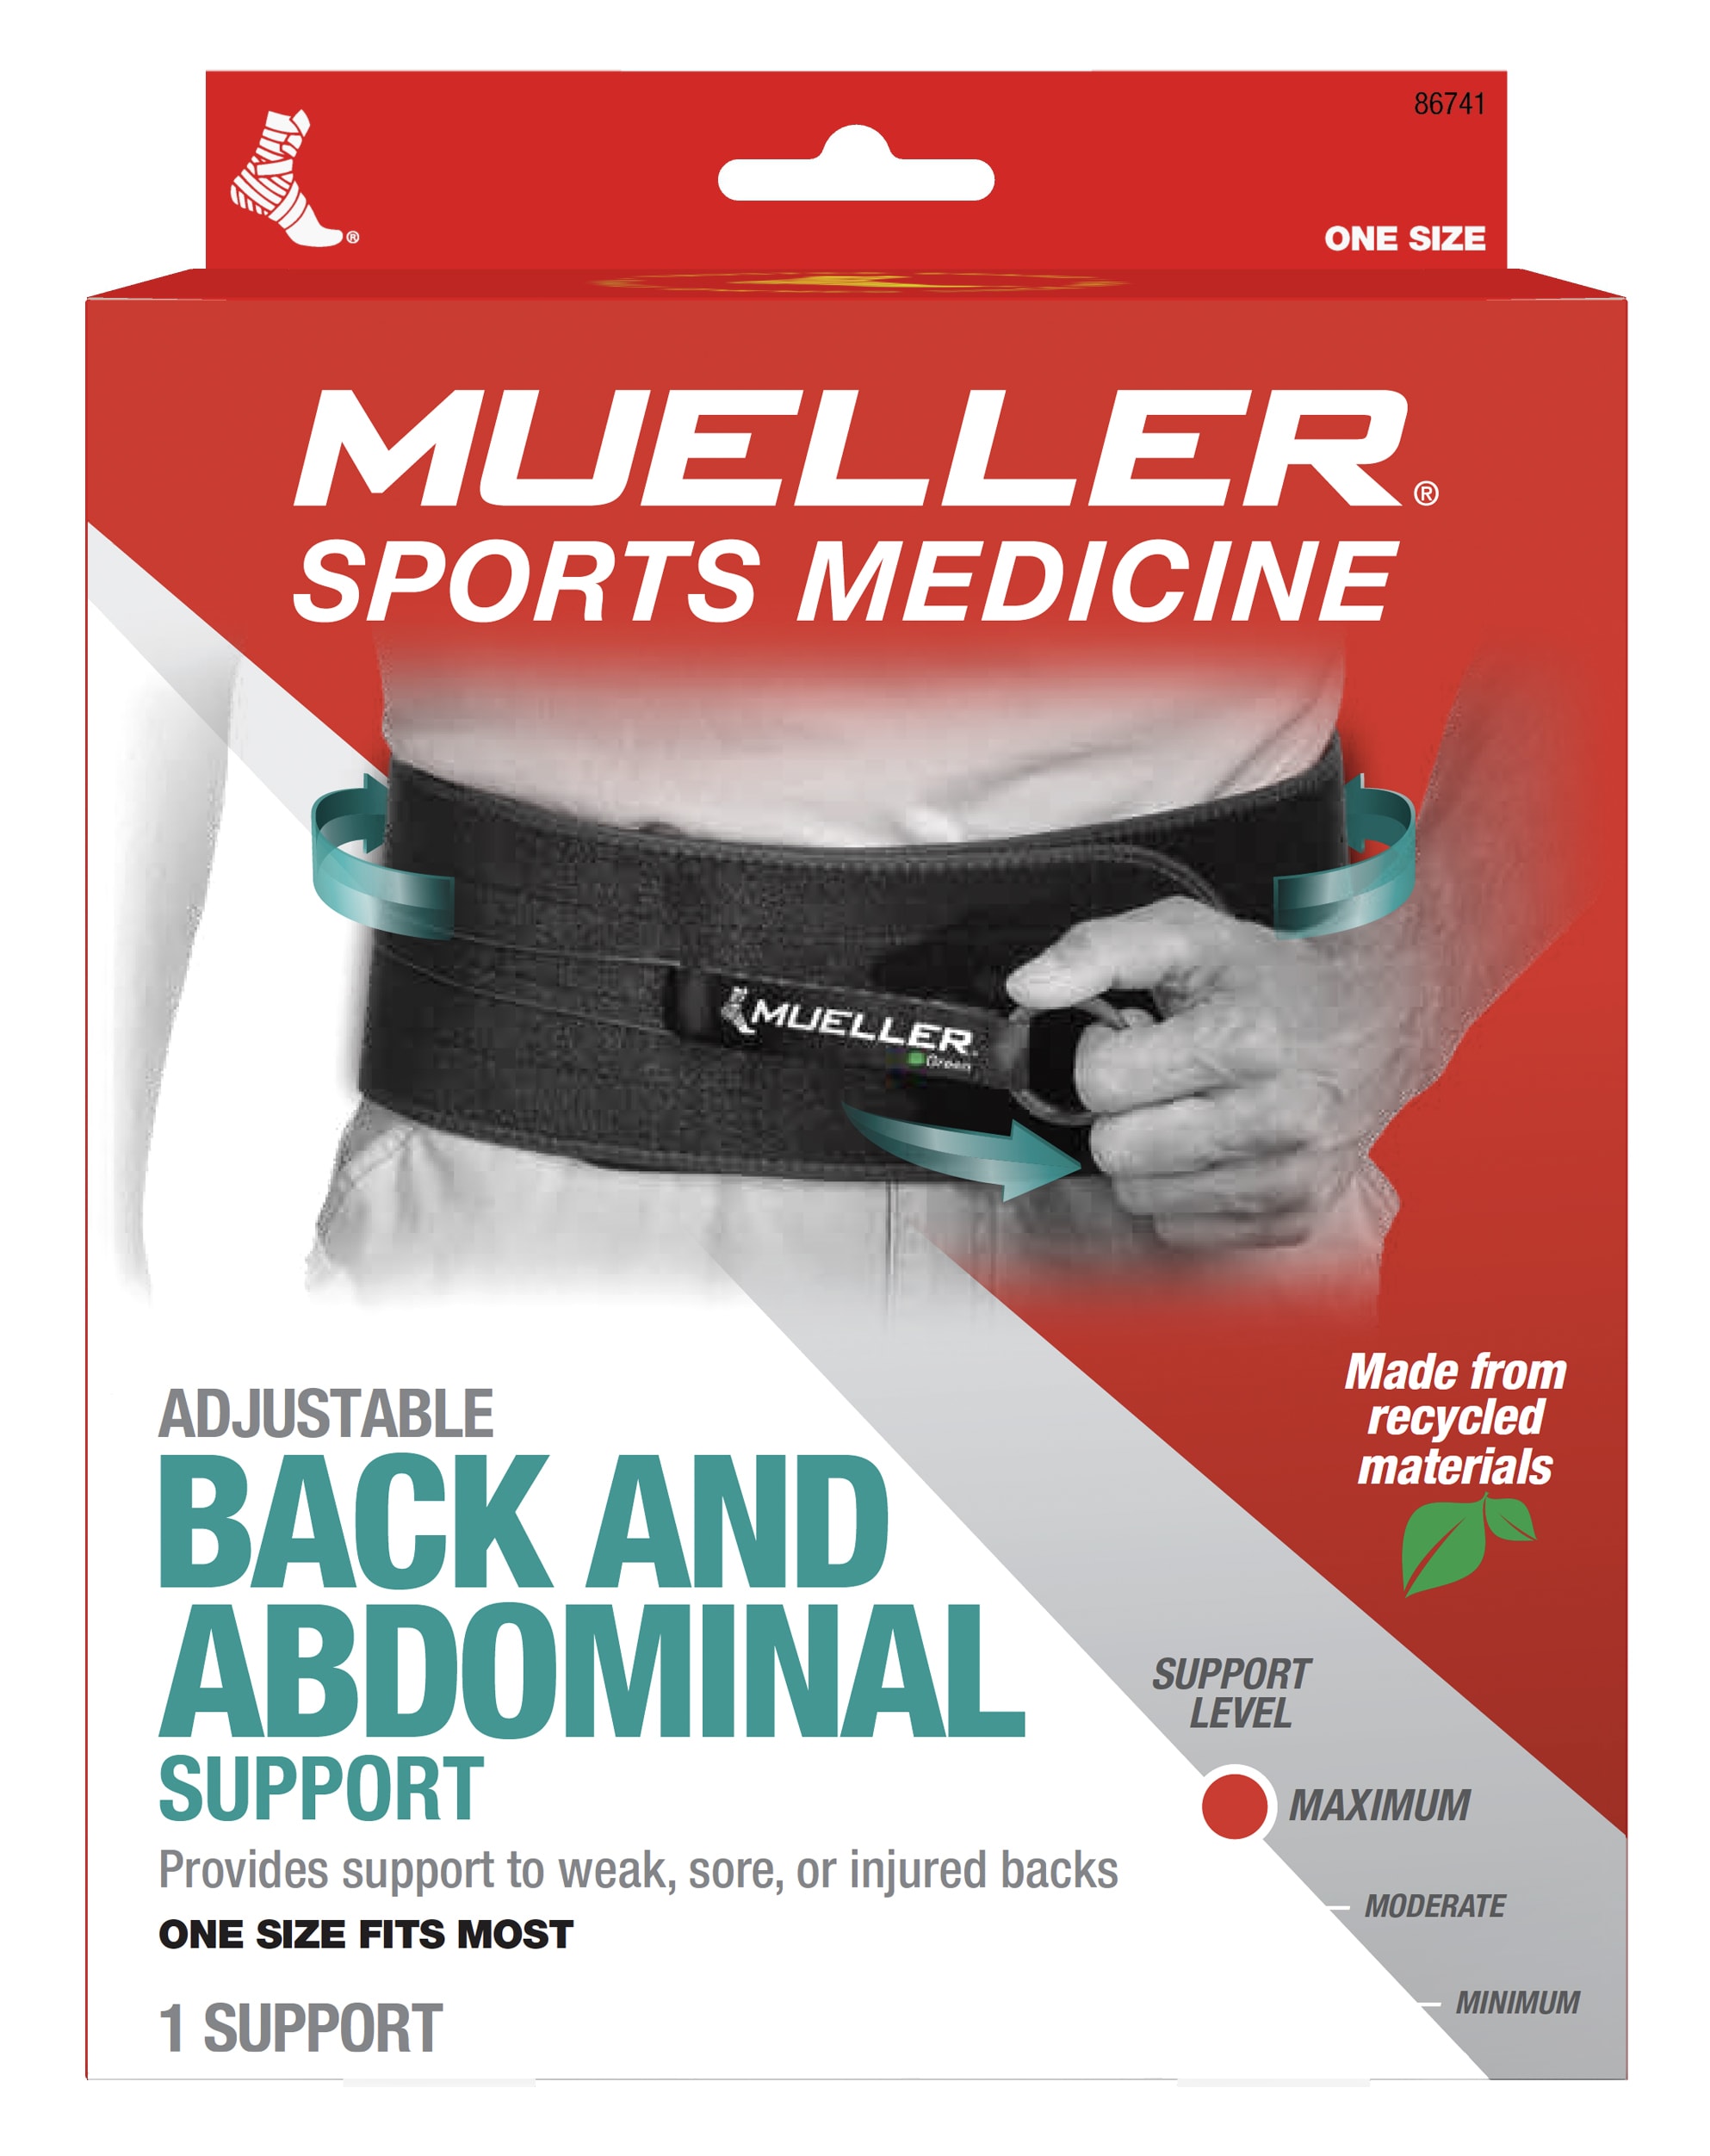 Mueller Sports Medicine Mueller Wrist Brace Reversible, Provides